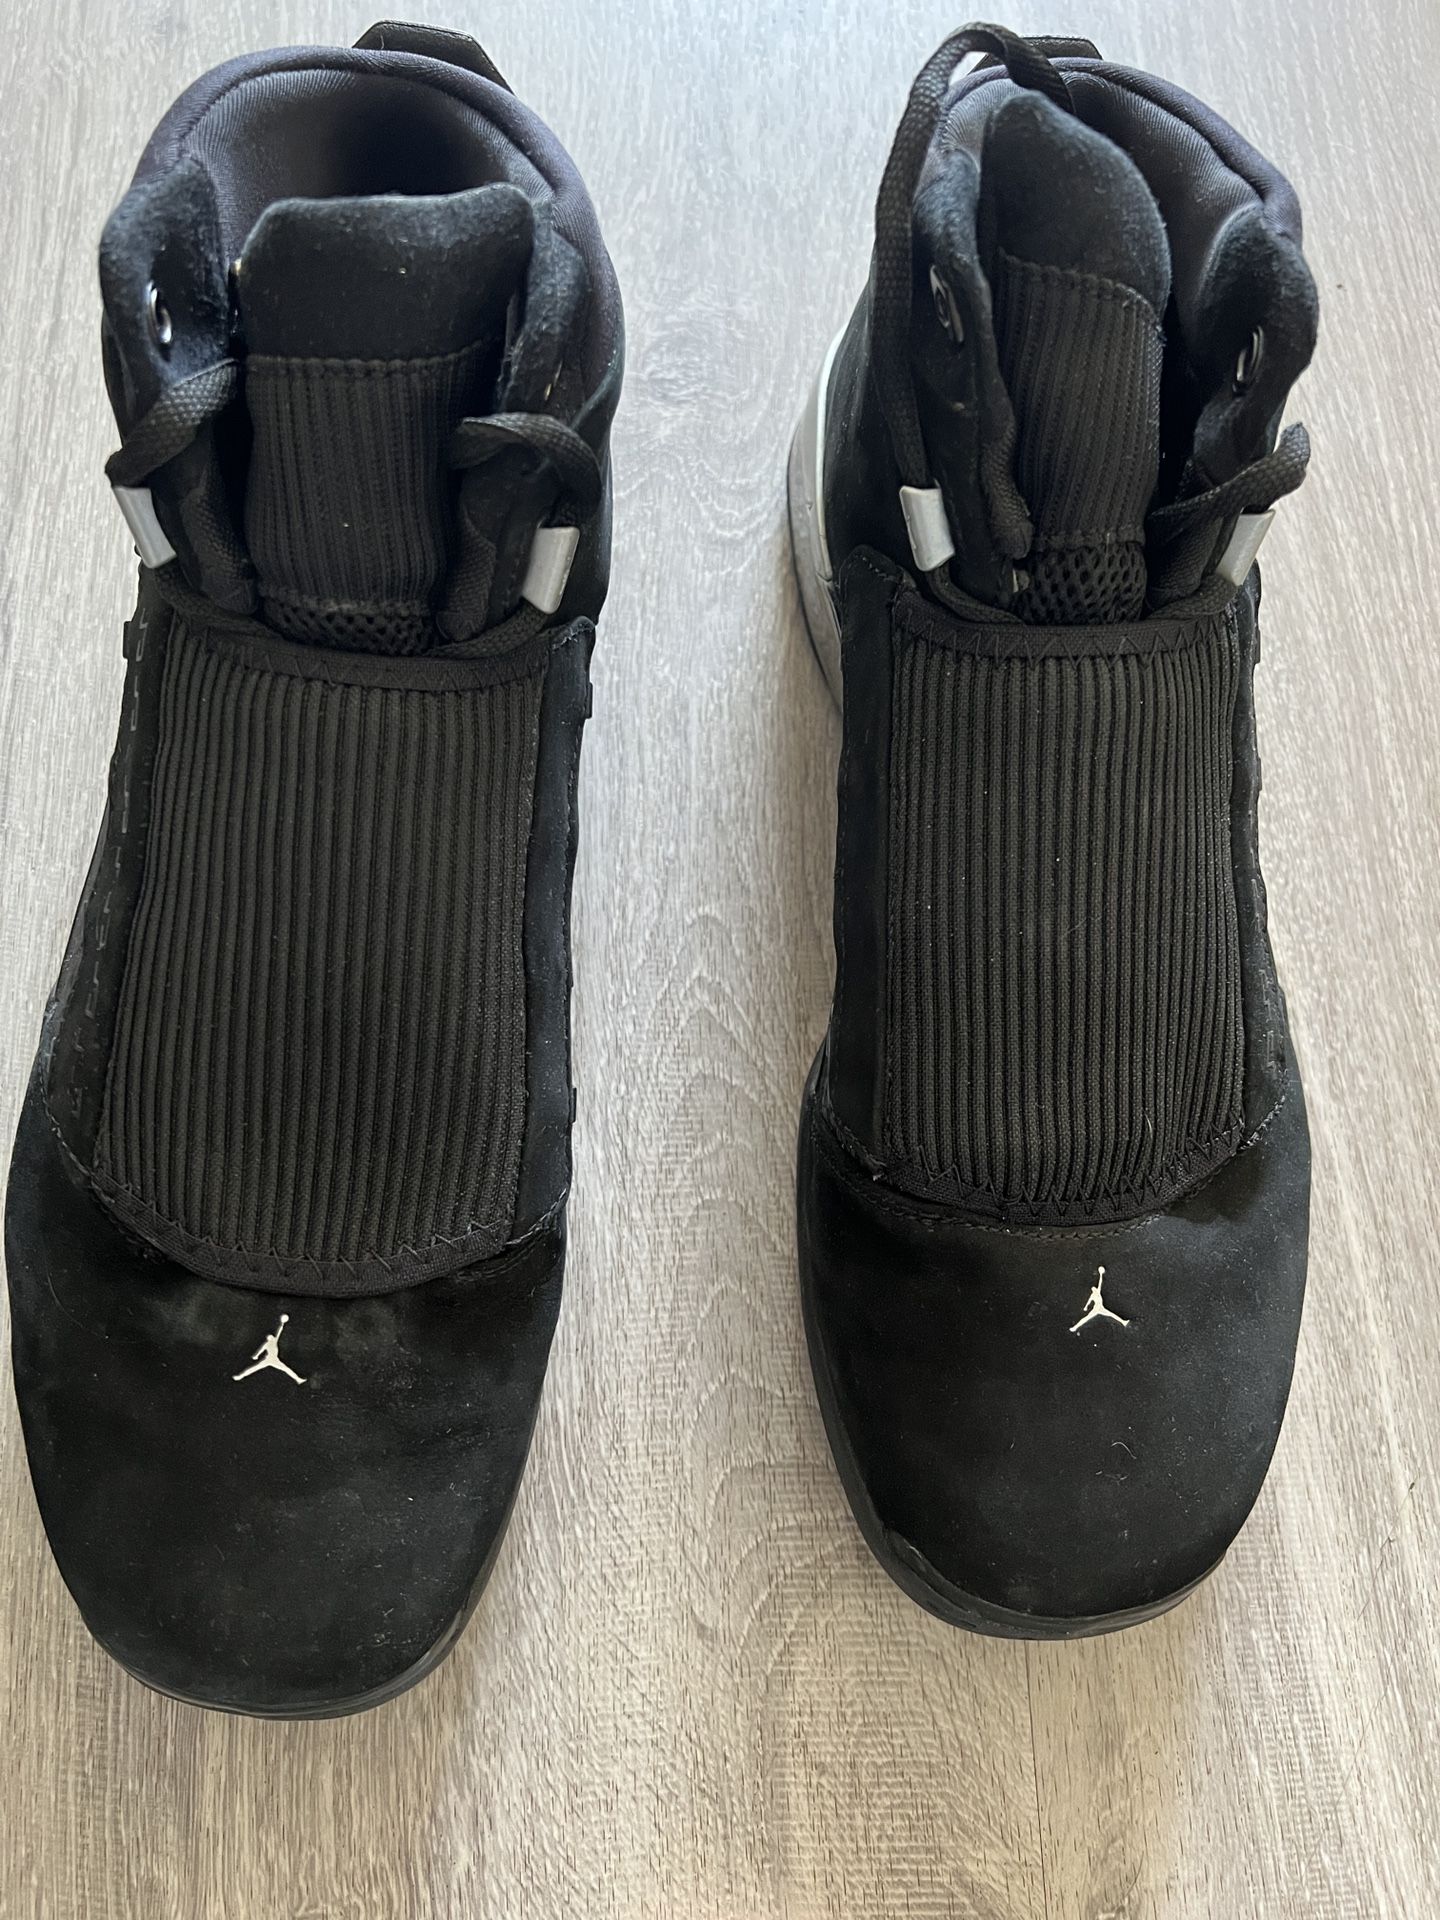 Retro Air Jordan 17 Black Suede Size 12